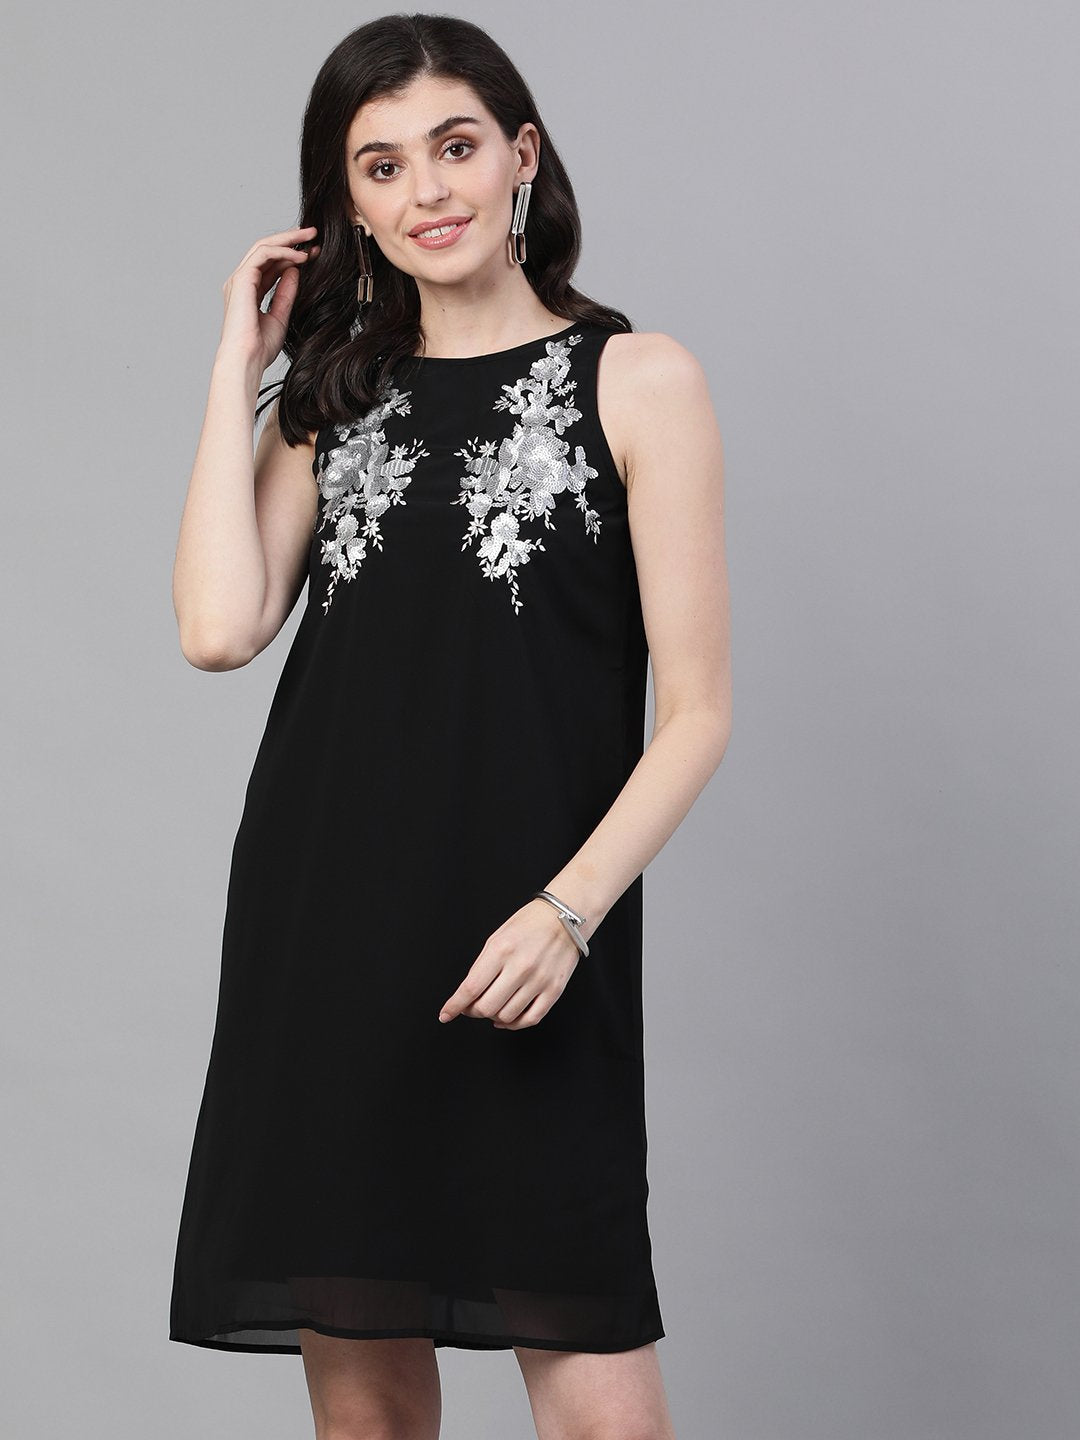 Ishin Women's Poly Crepe Black Embellished A-Line Dress